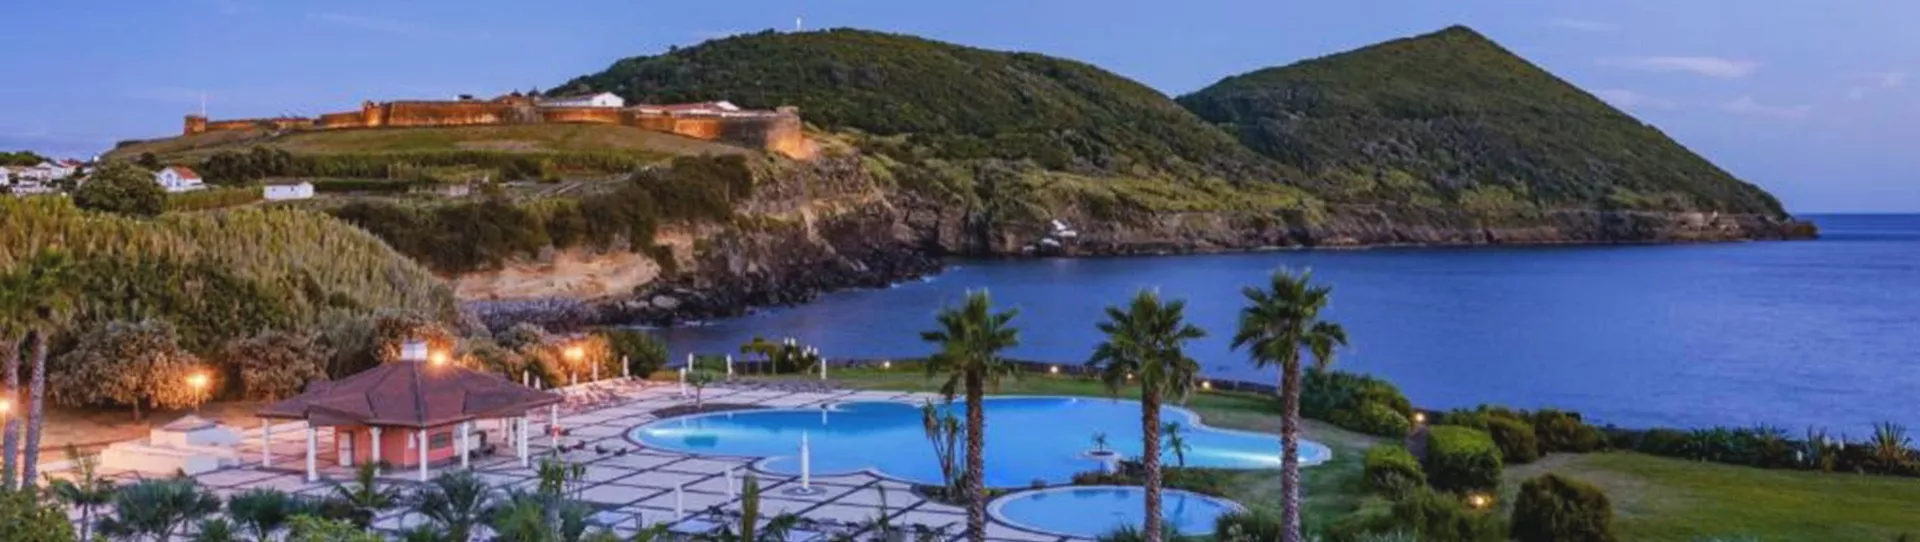 Portugal golf holidays - Terceira Mar Hotel - Photo 2